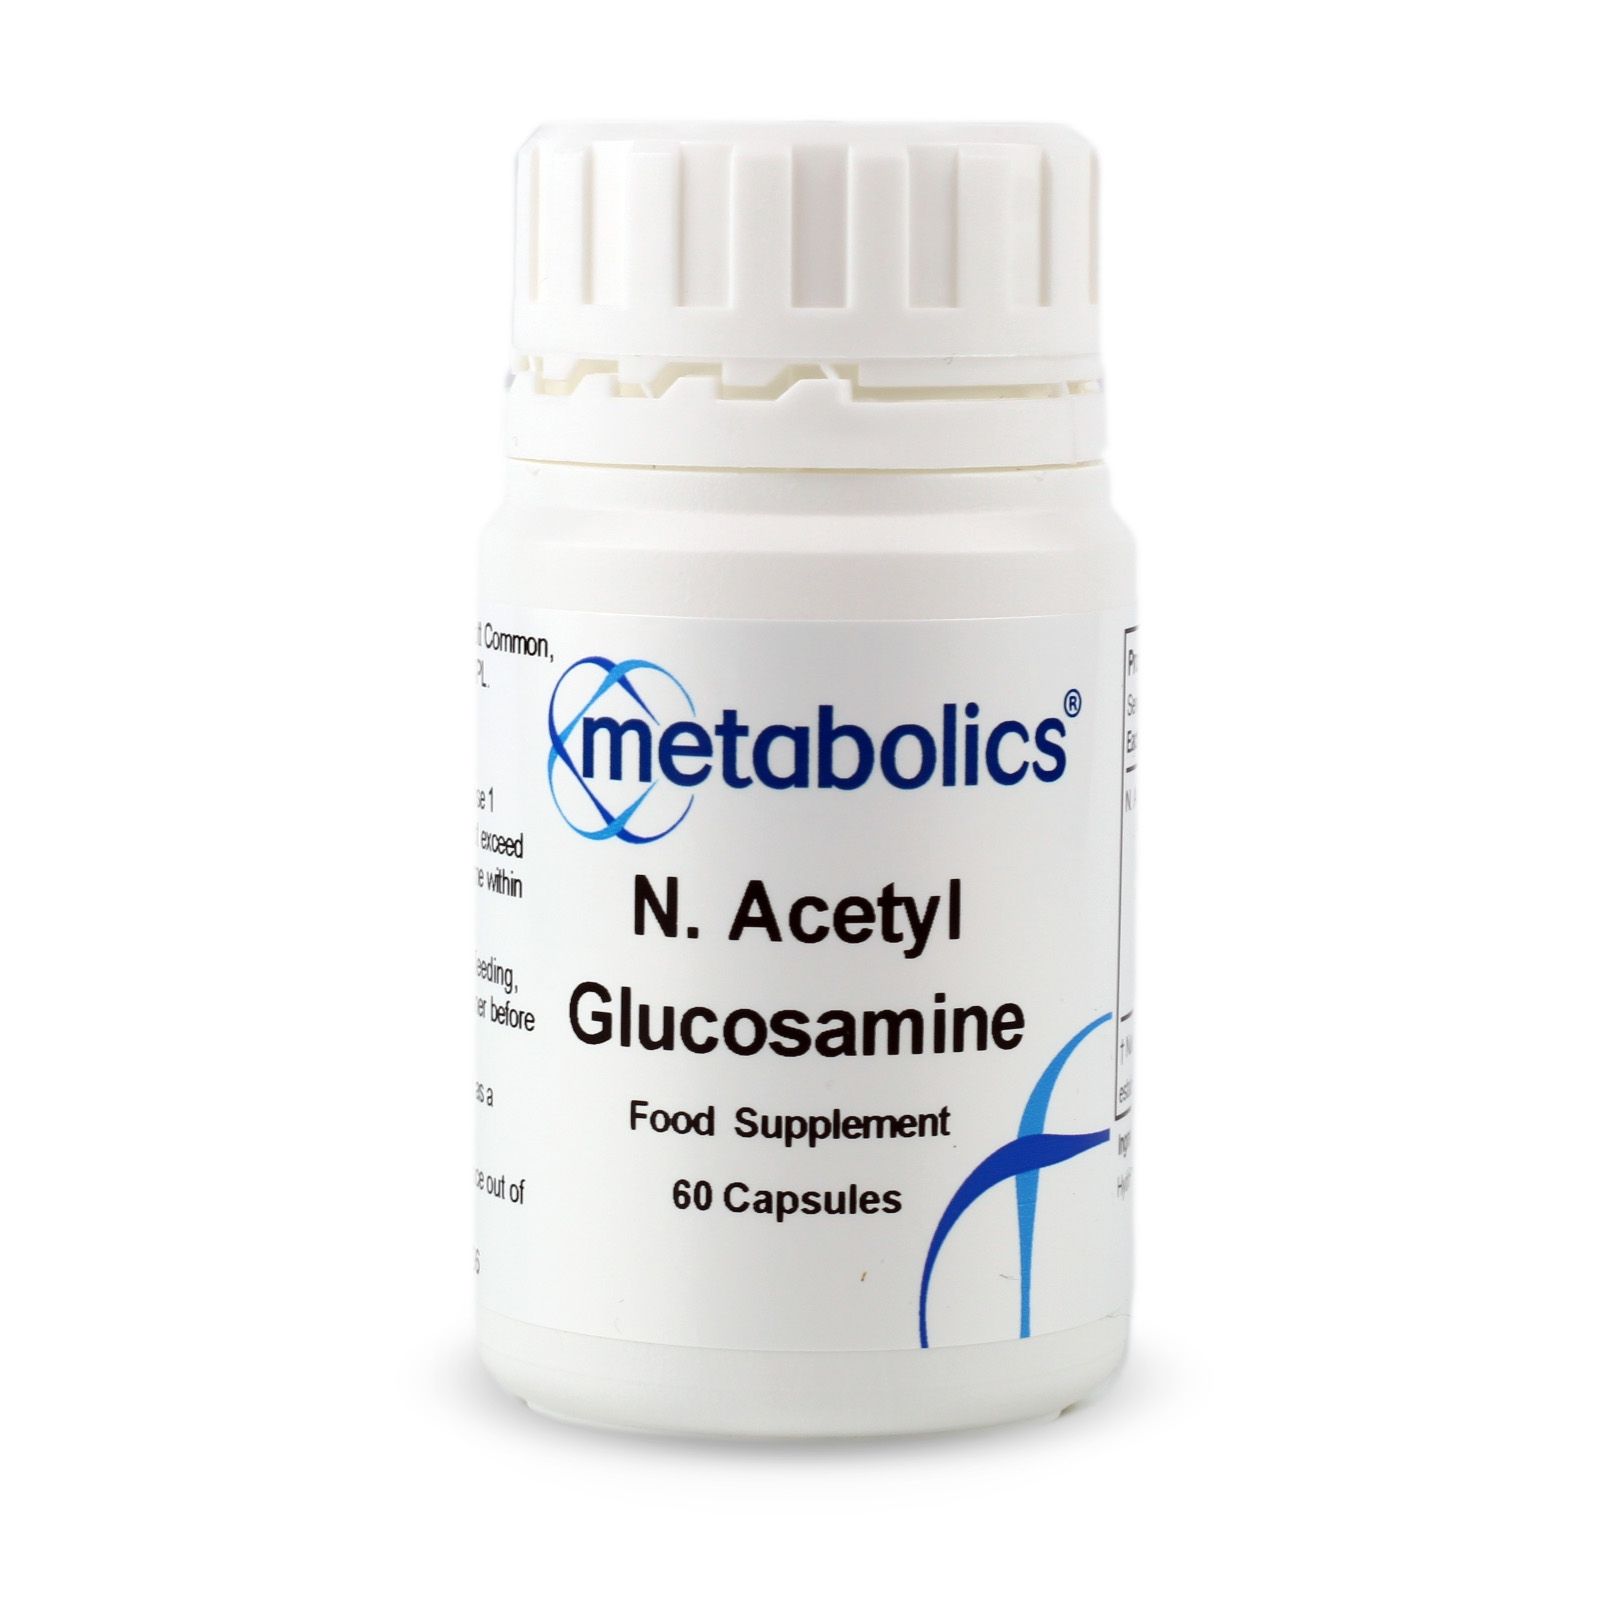 N. Acetyl Glucosamine (Pot of 60 capsules)